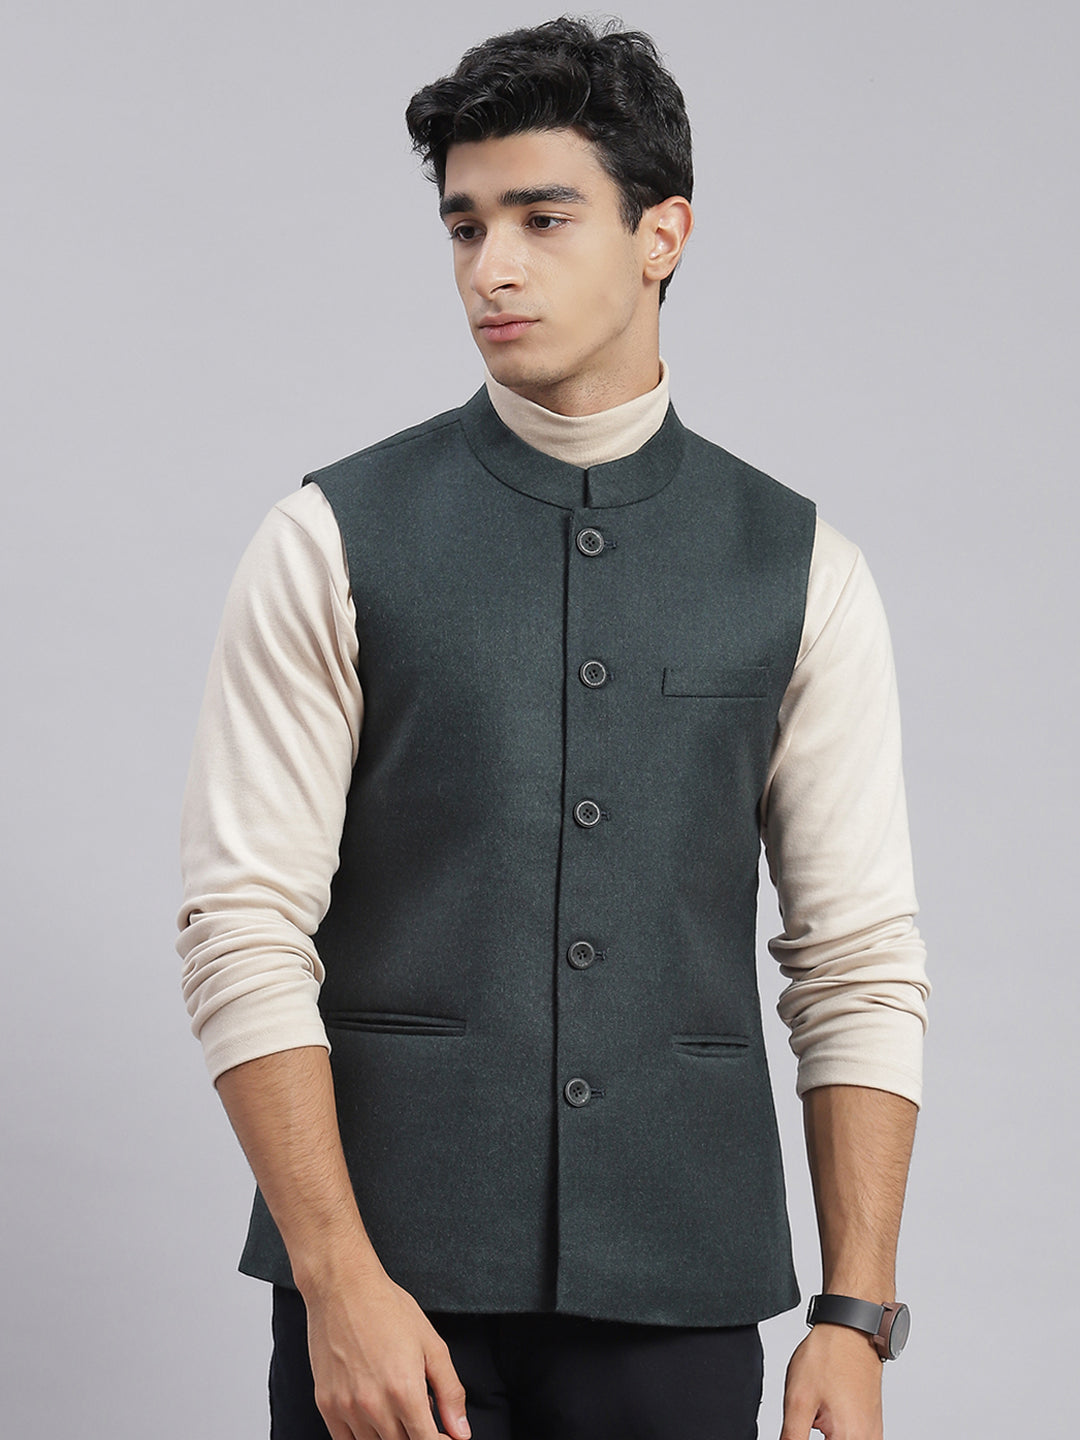 Finethread Sleeveless Solid Men Jacket - Buy Finethread Sleeveless Solid  Men Jacket Online at Best Prices in India | Flipkart.com